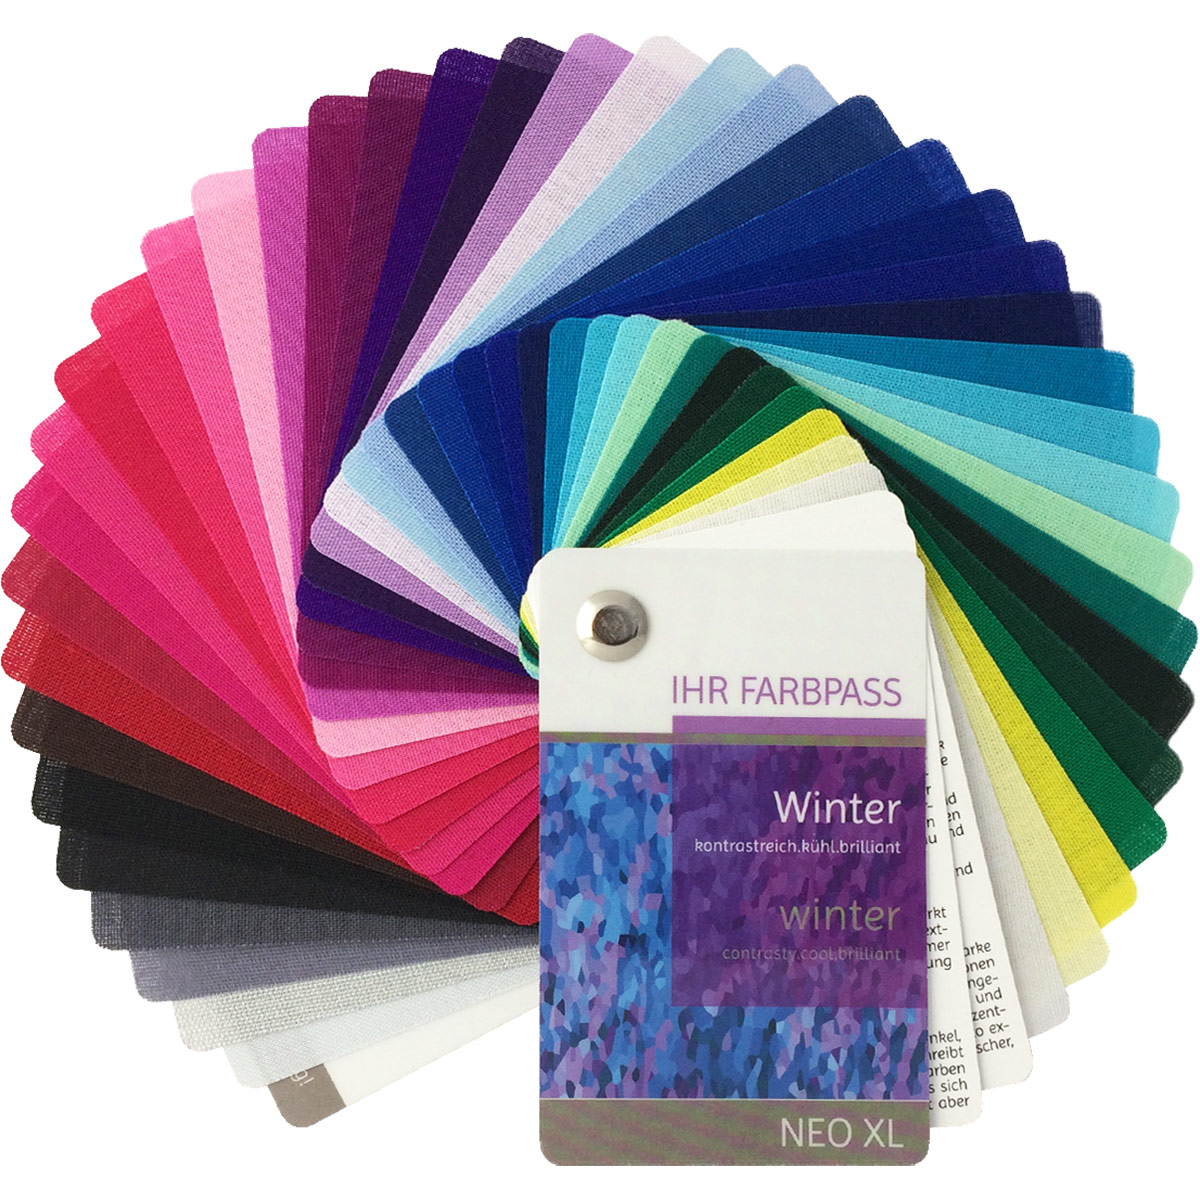 Farbpass Winter - Neo XL, 40 Farben